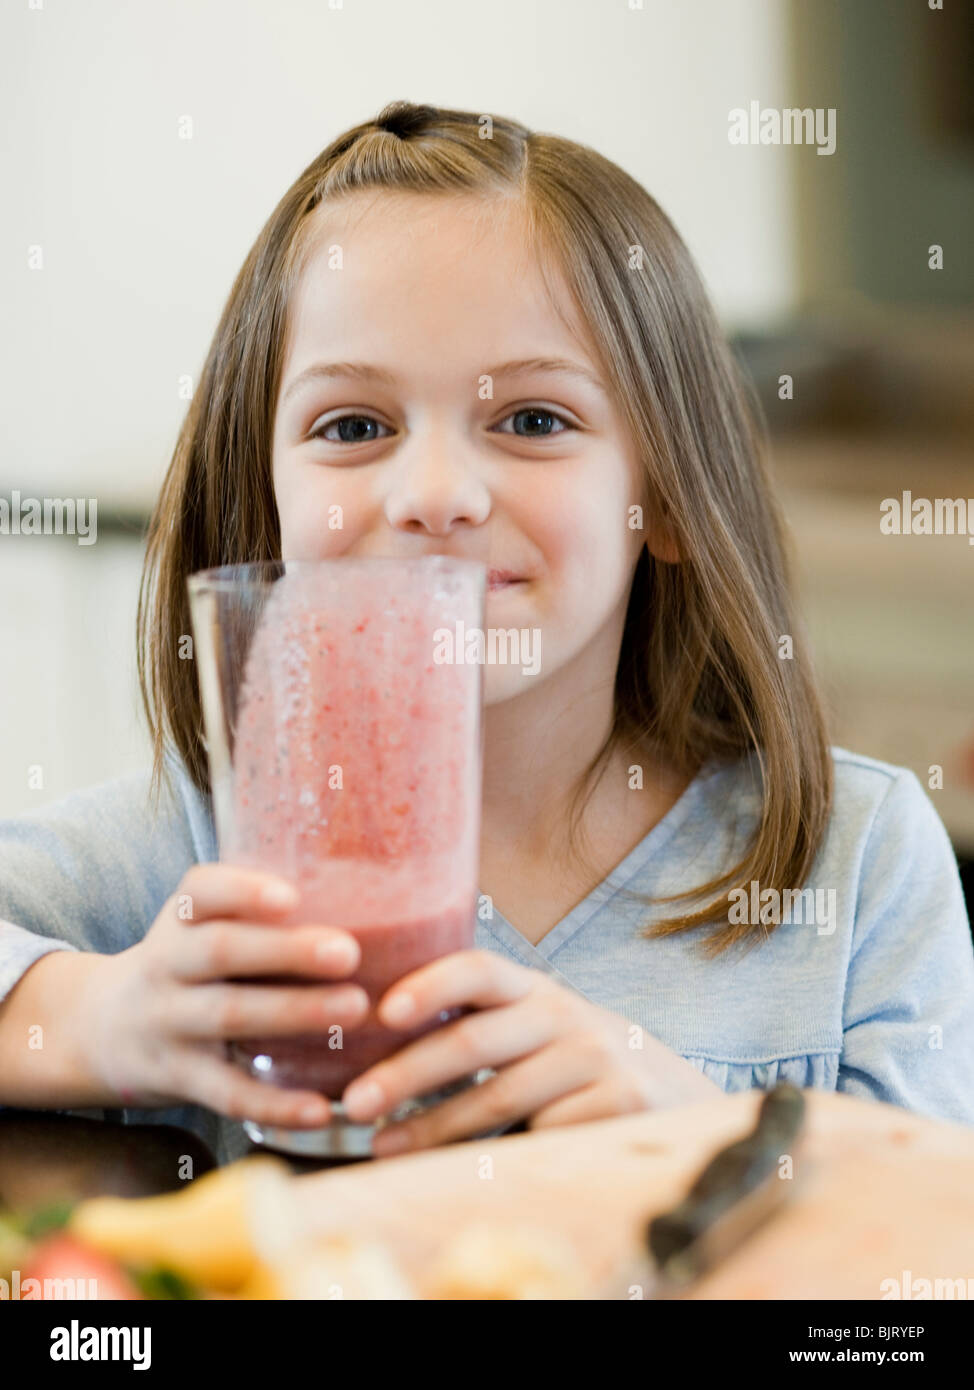 USA, Utah, Alpine, girl (8-9) holding smoothie Stock Photo